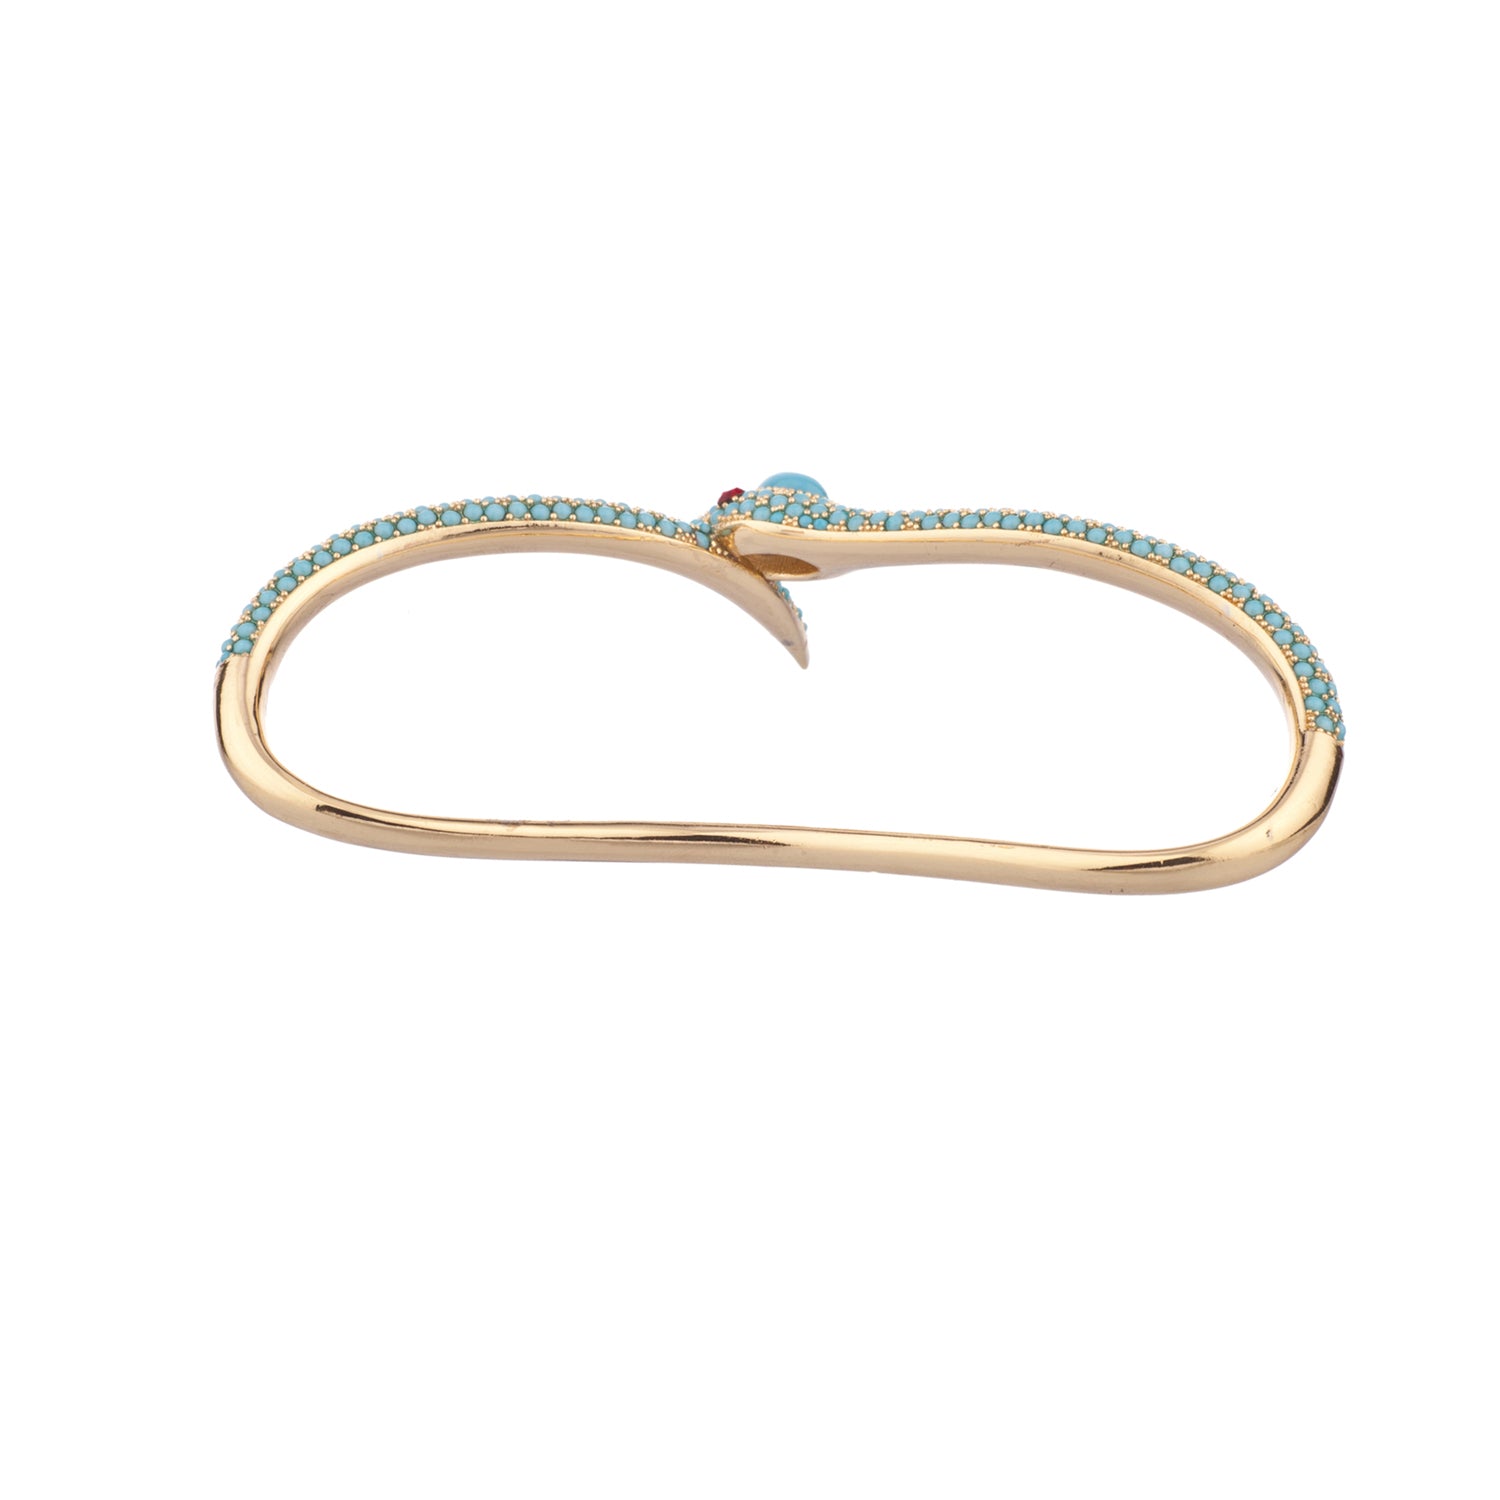 Pin by Roberta Marques on Produtos ❤ | Hand palm bracelet, Palm bracelet,  Palm cuff